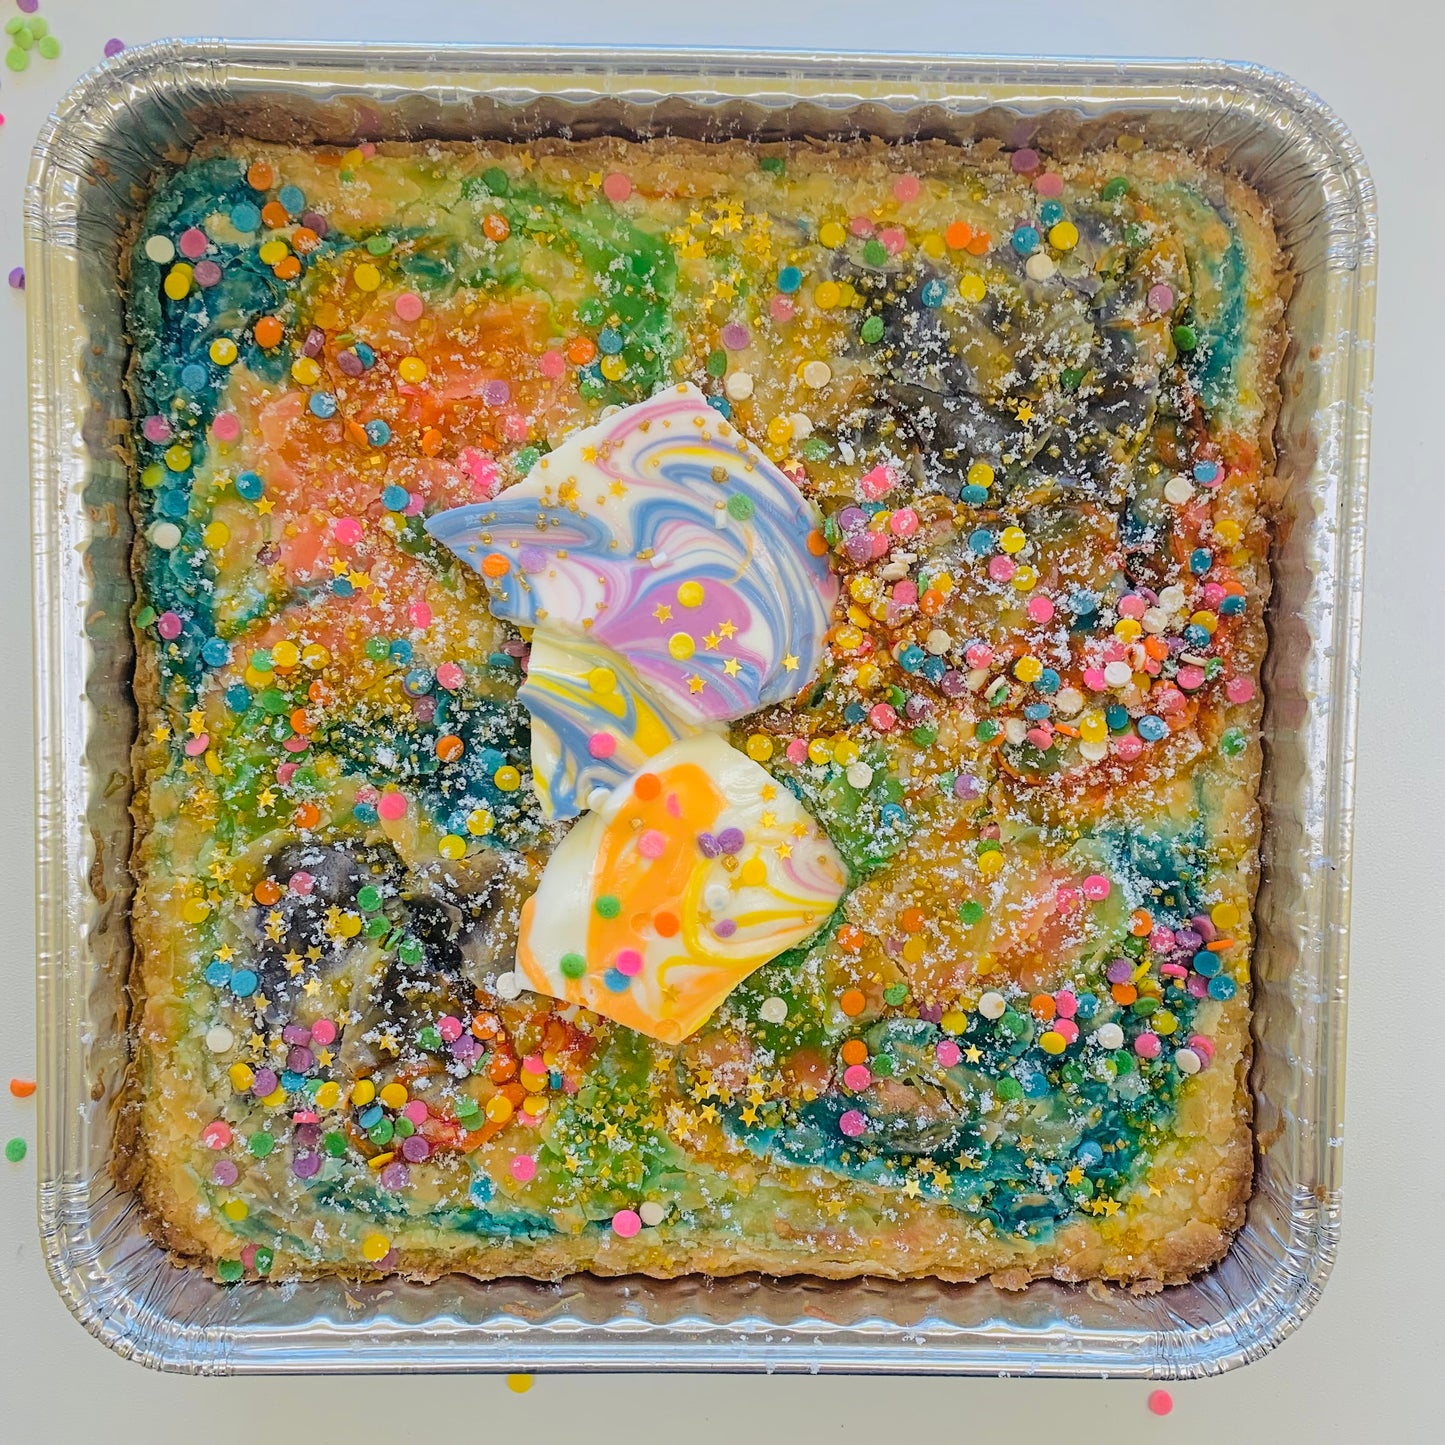 Rainbow Unicorn Gooey Louie Gooey Butter Cake LOCAL PICKUP